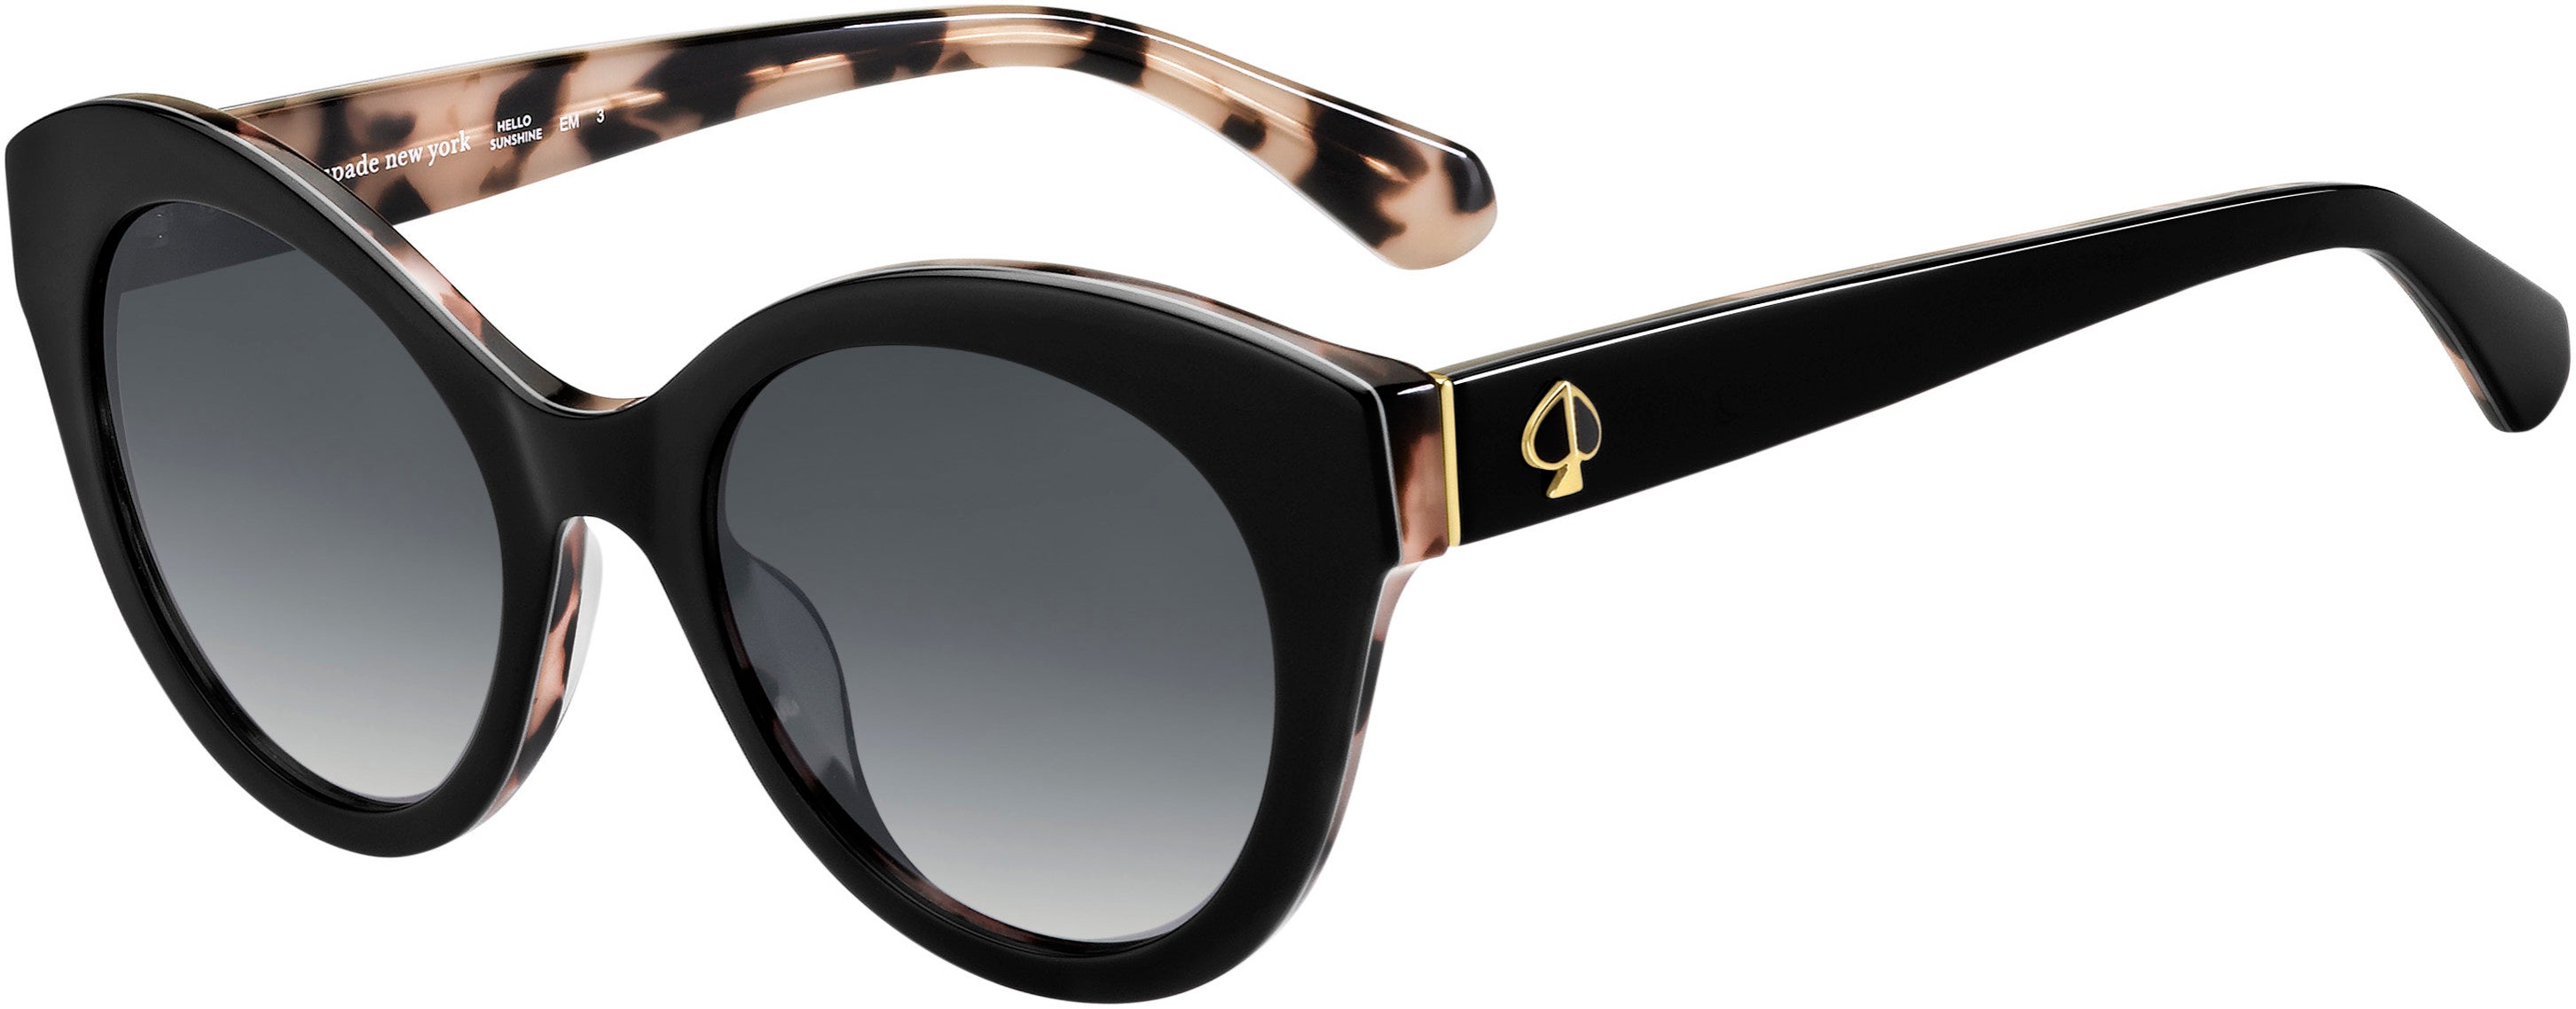 Kate Spade Karleigh/S Oval Modified Sunglasses 02TB-02TB  Black Pink Havana (9O Dark Gray Gradient)